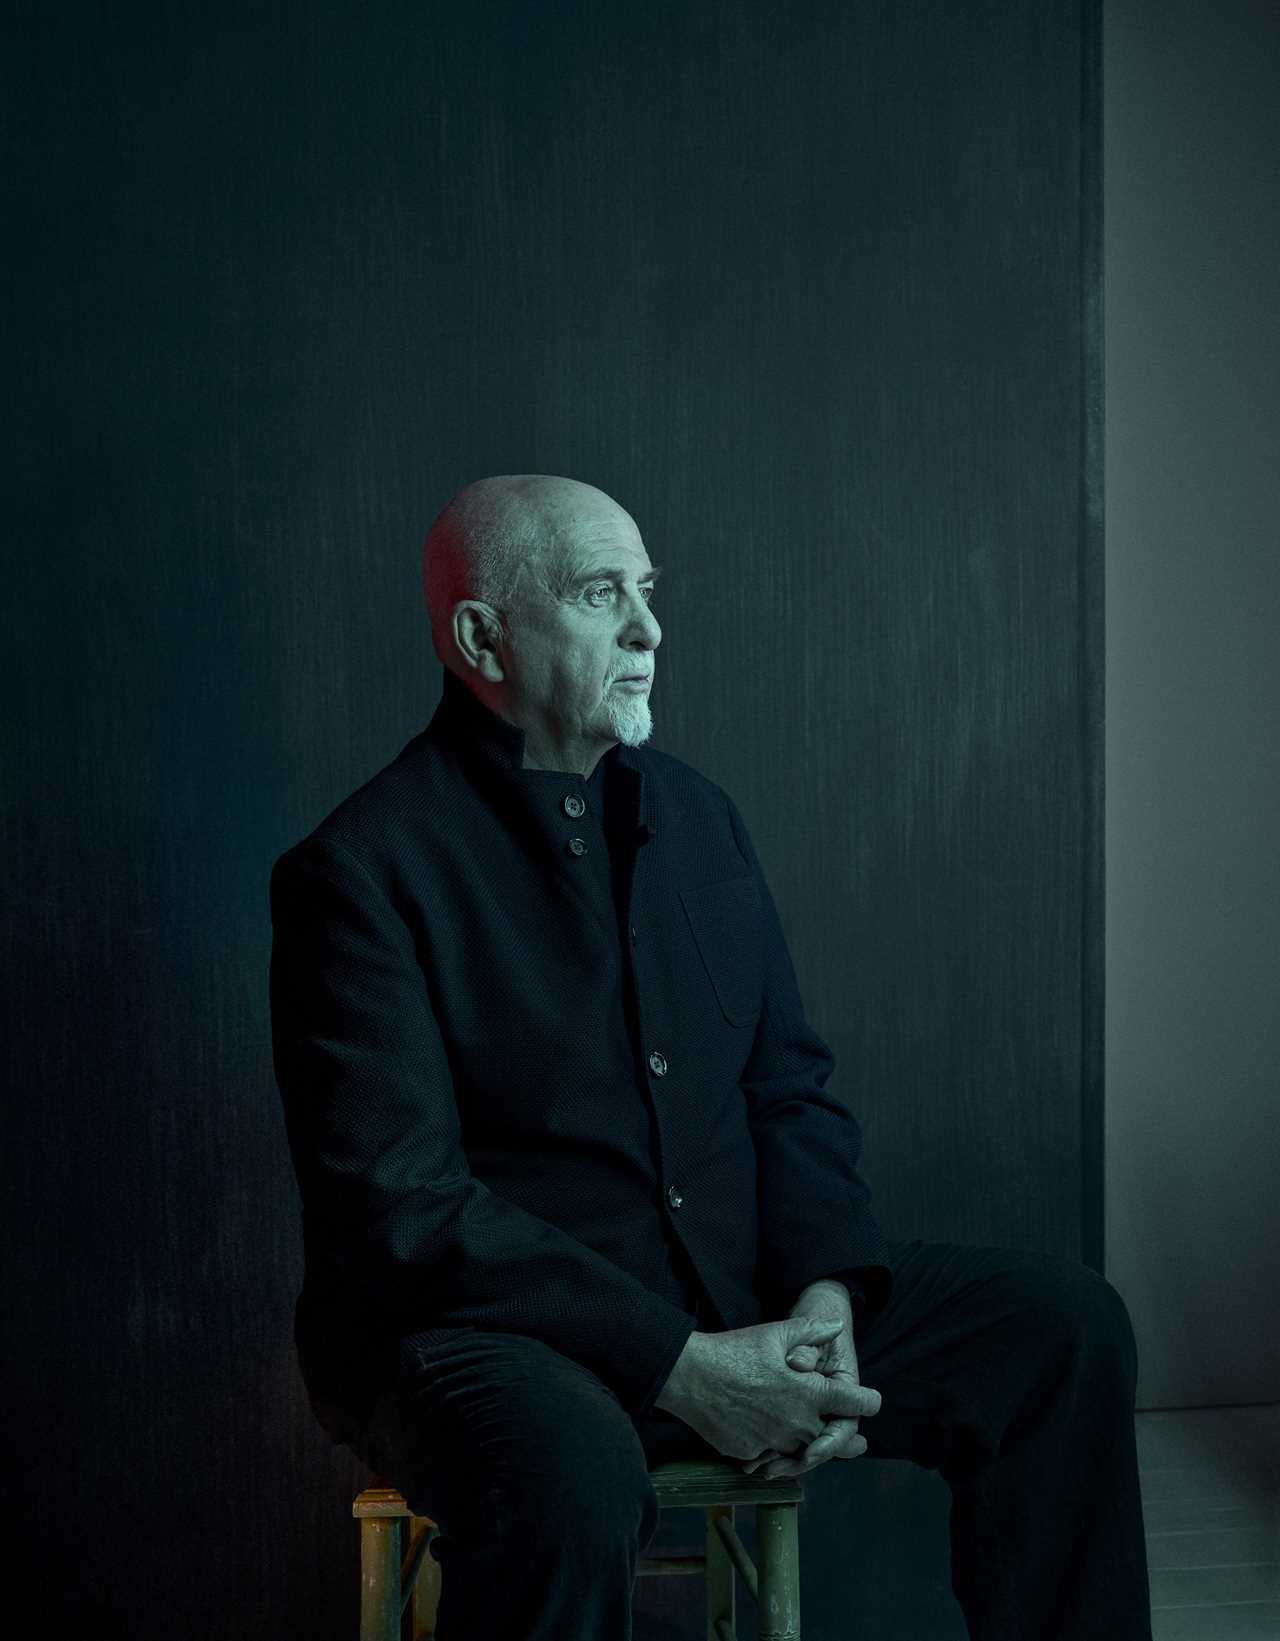 Genesis rocker Peter Gabriel defies mortality with new album release